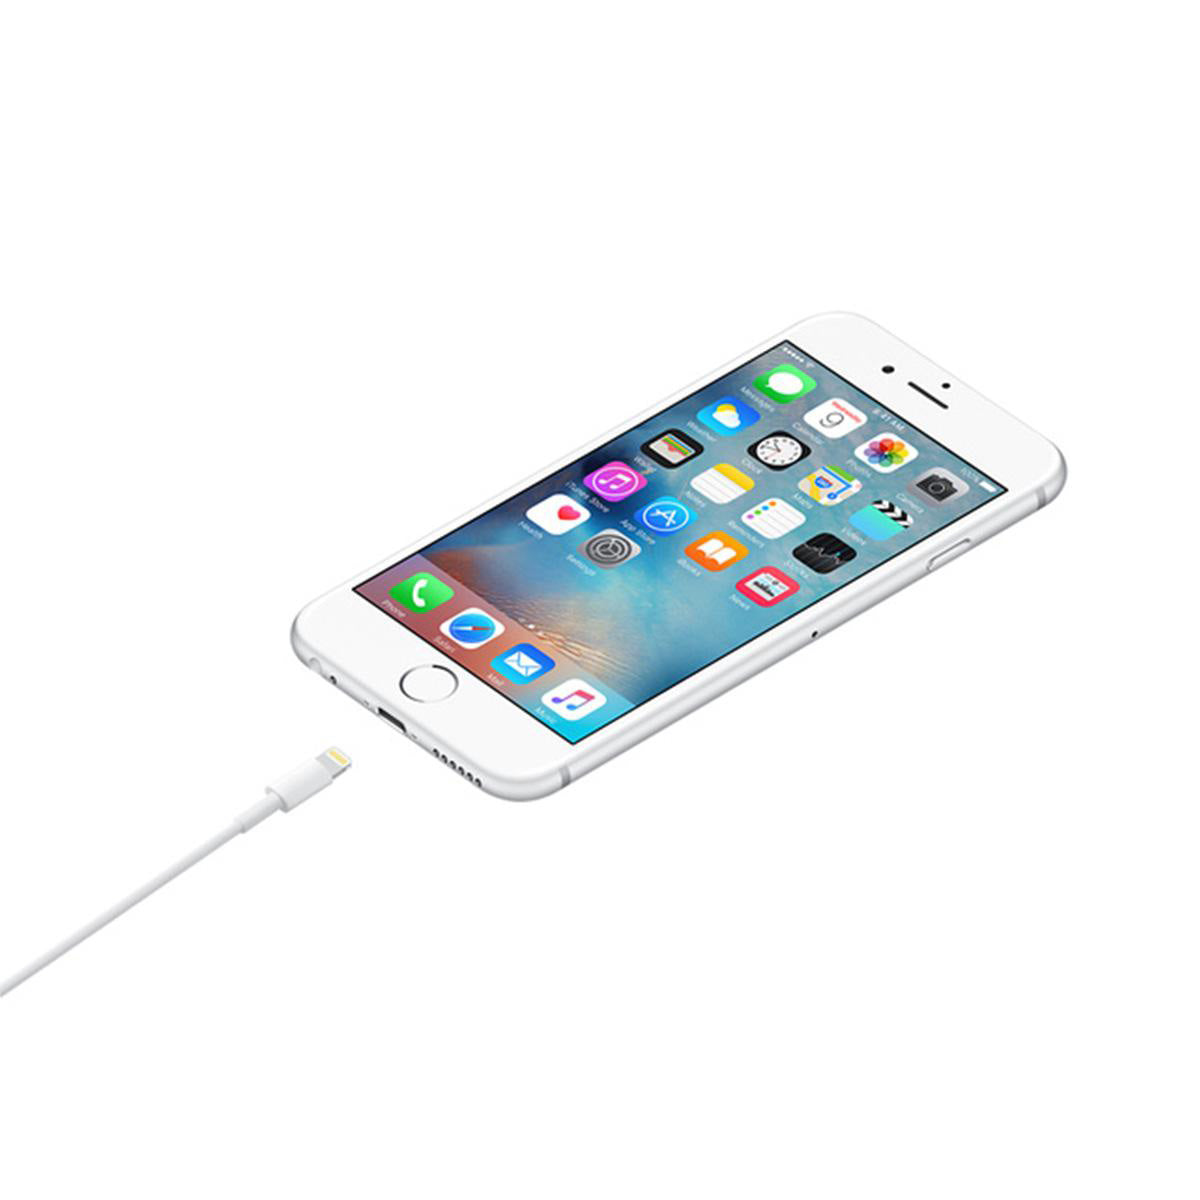 Apple Original Lightning to USB Cable (1M)